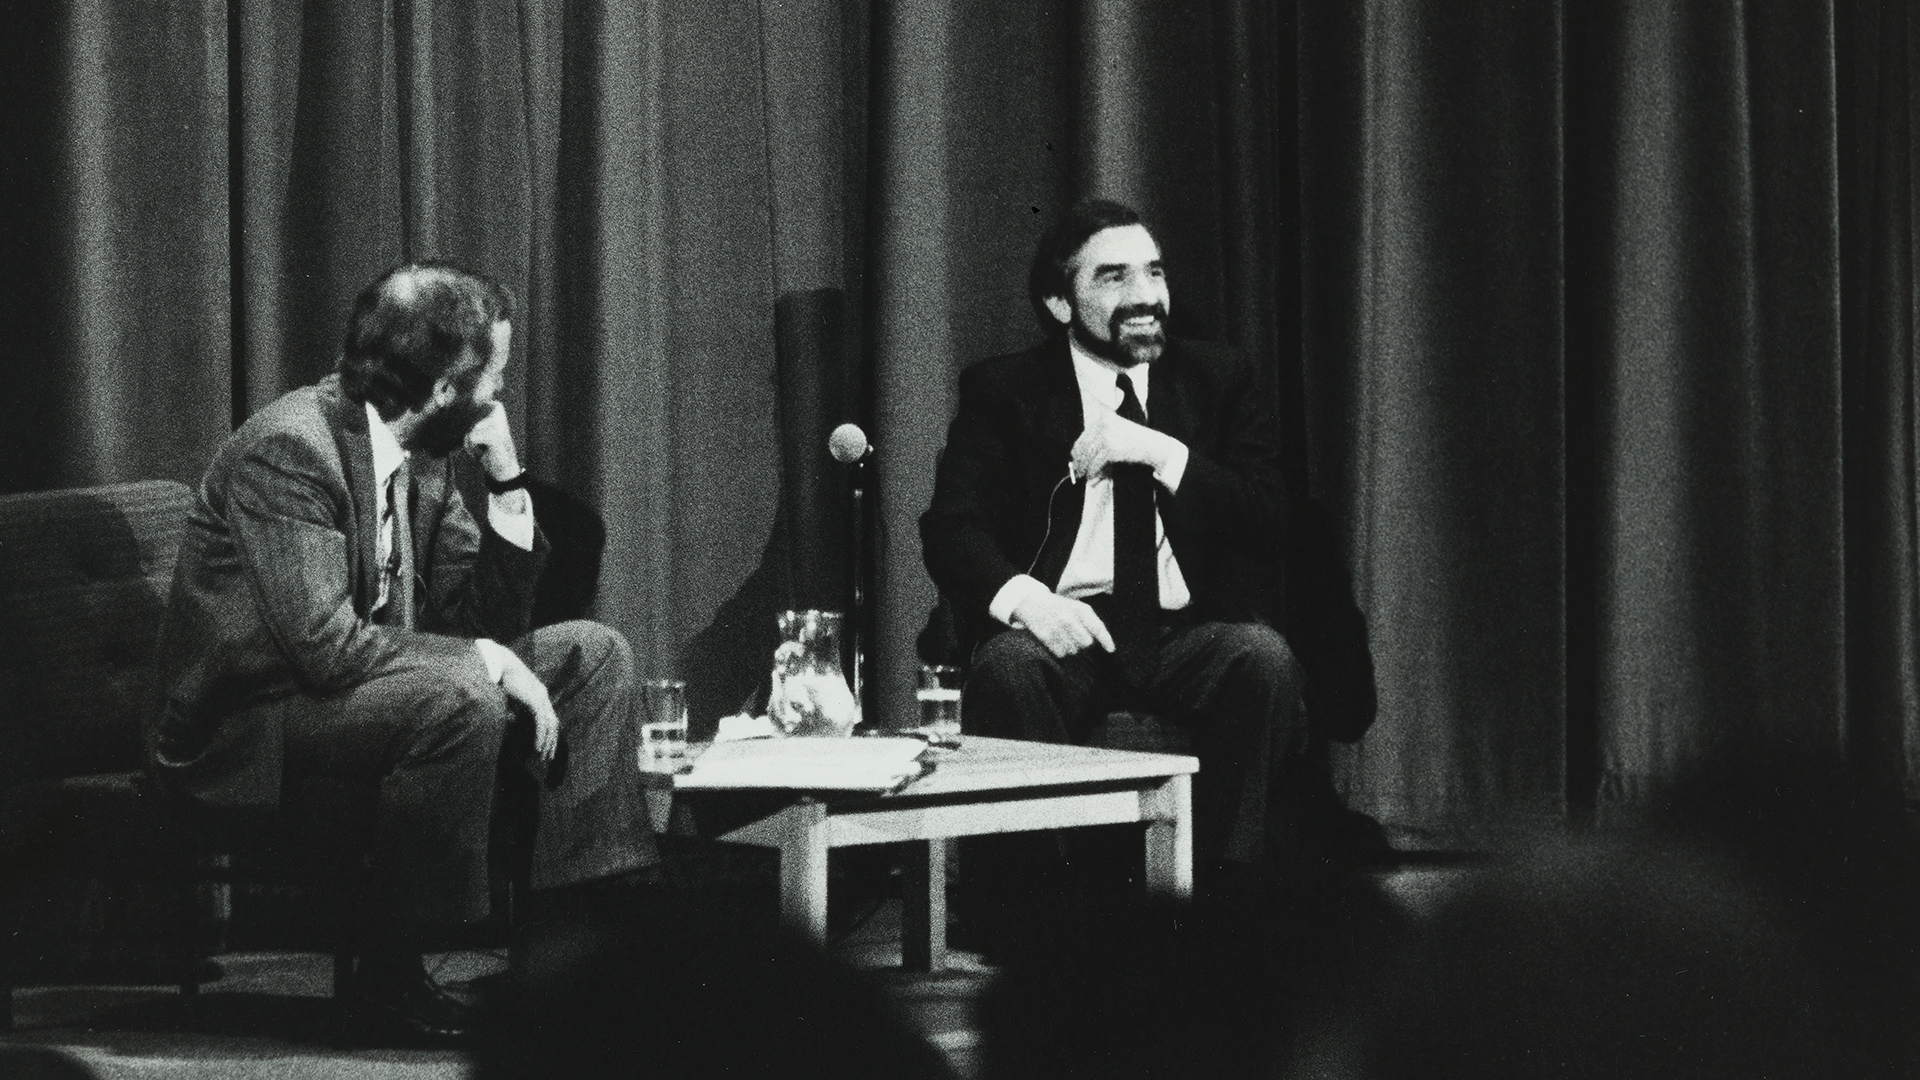 Martin Scorsese on stage at Filmhouse, 1985